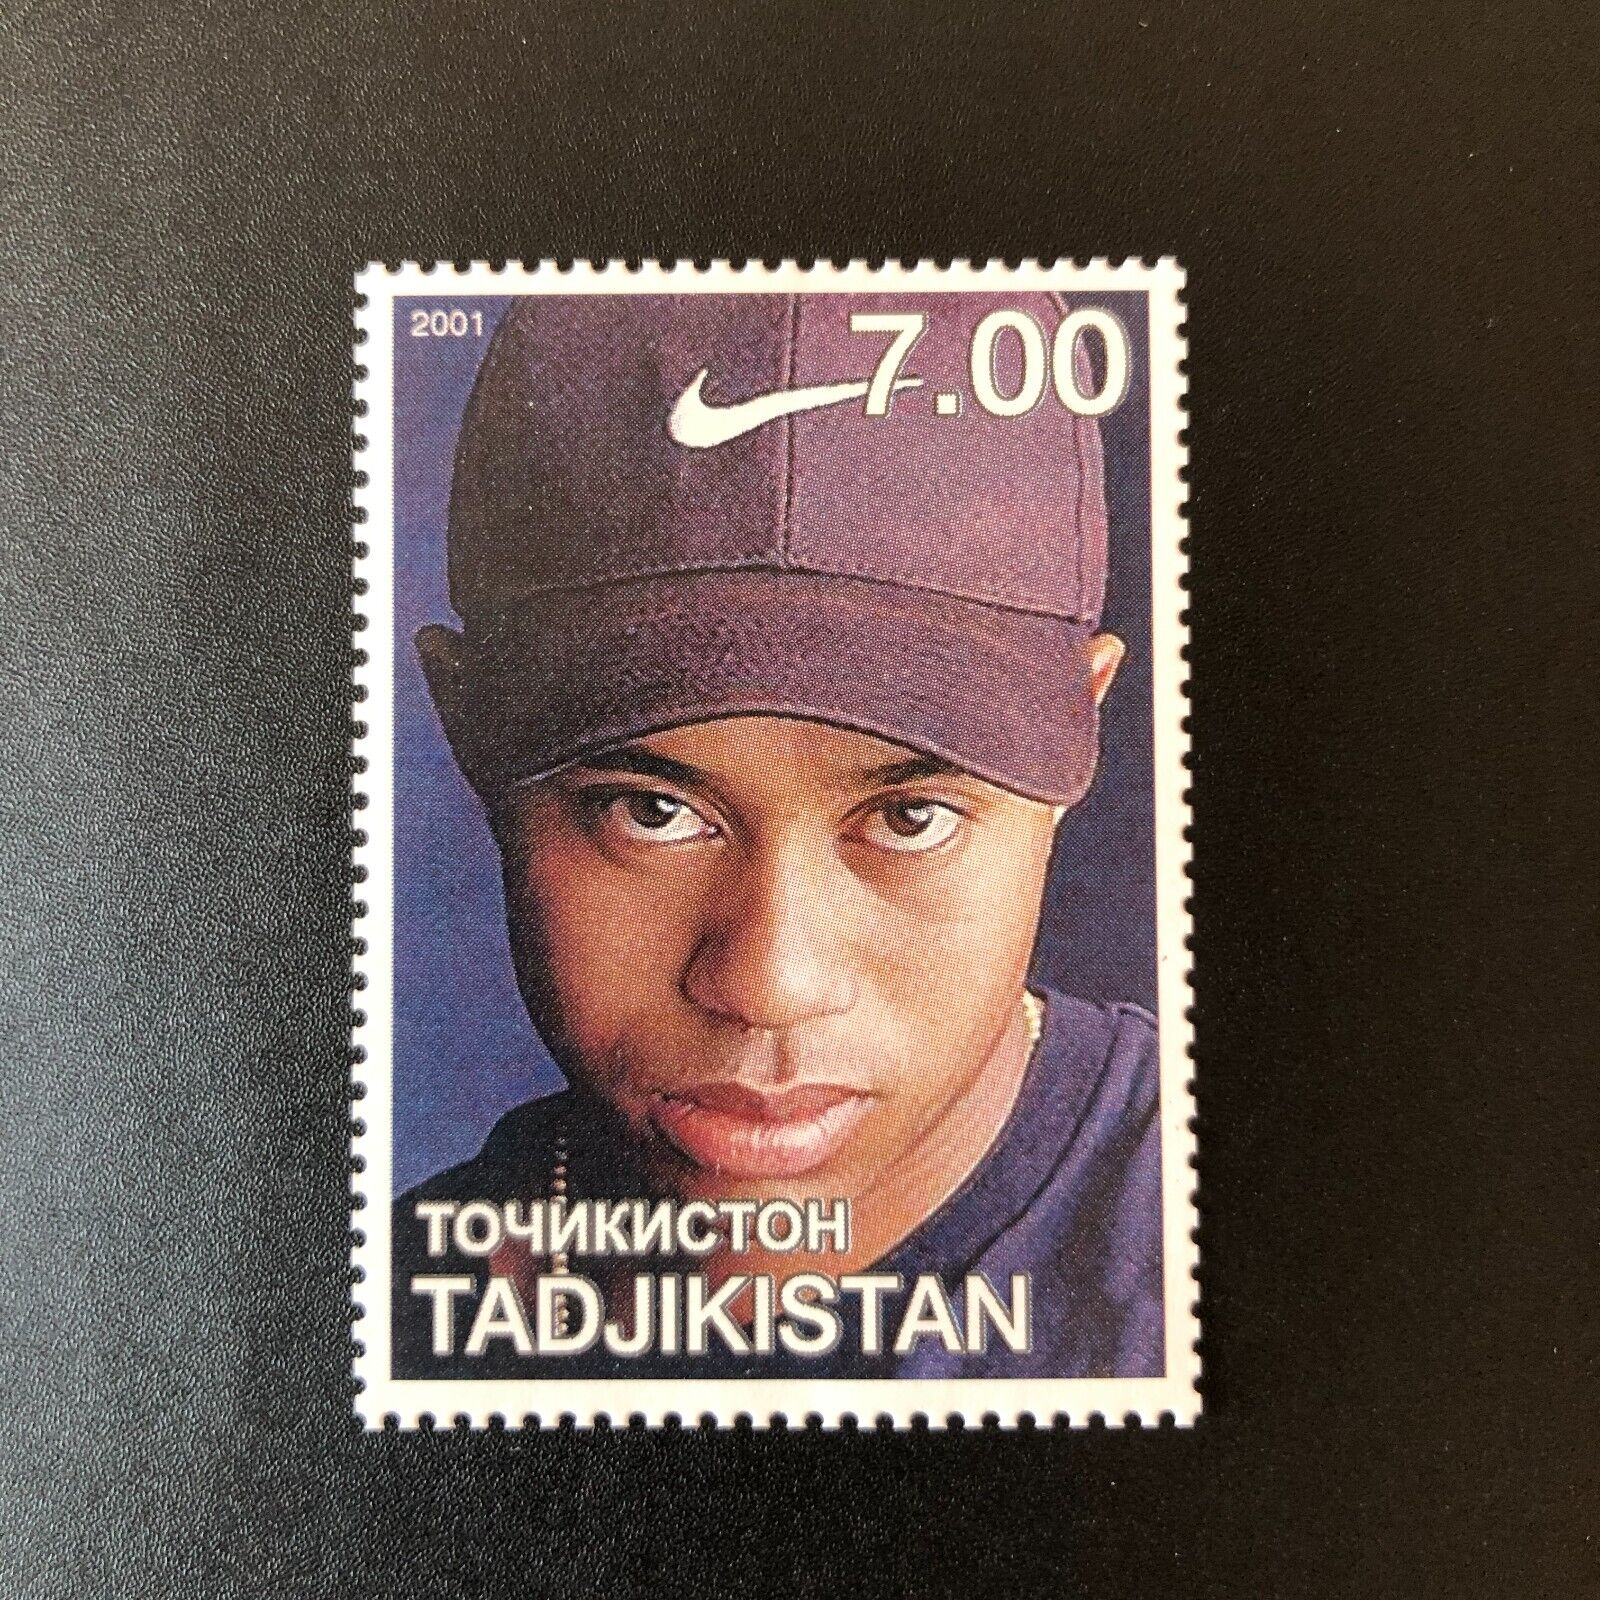 Tiger Woods Stamp 2001 Tadjikistan 7.00 New / Unused Golf Portrait Image